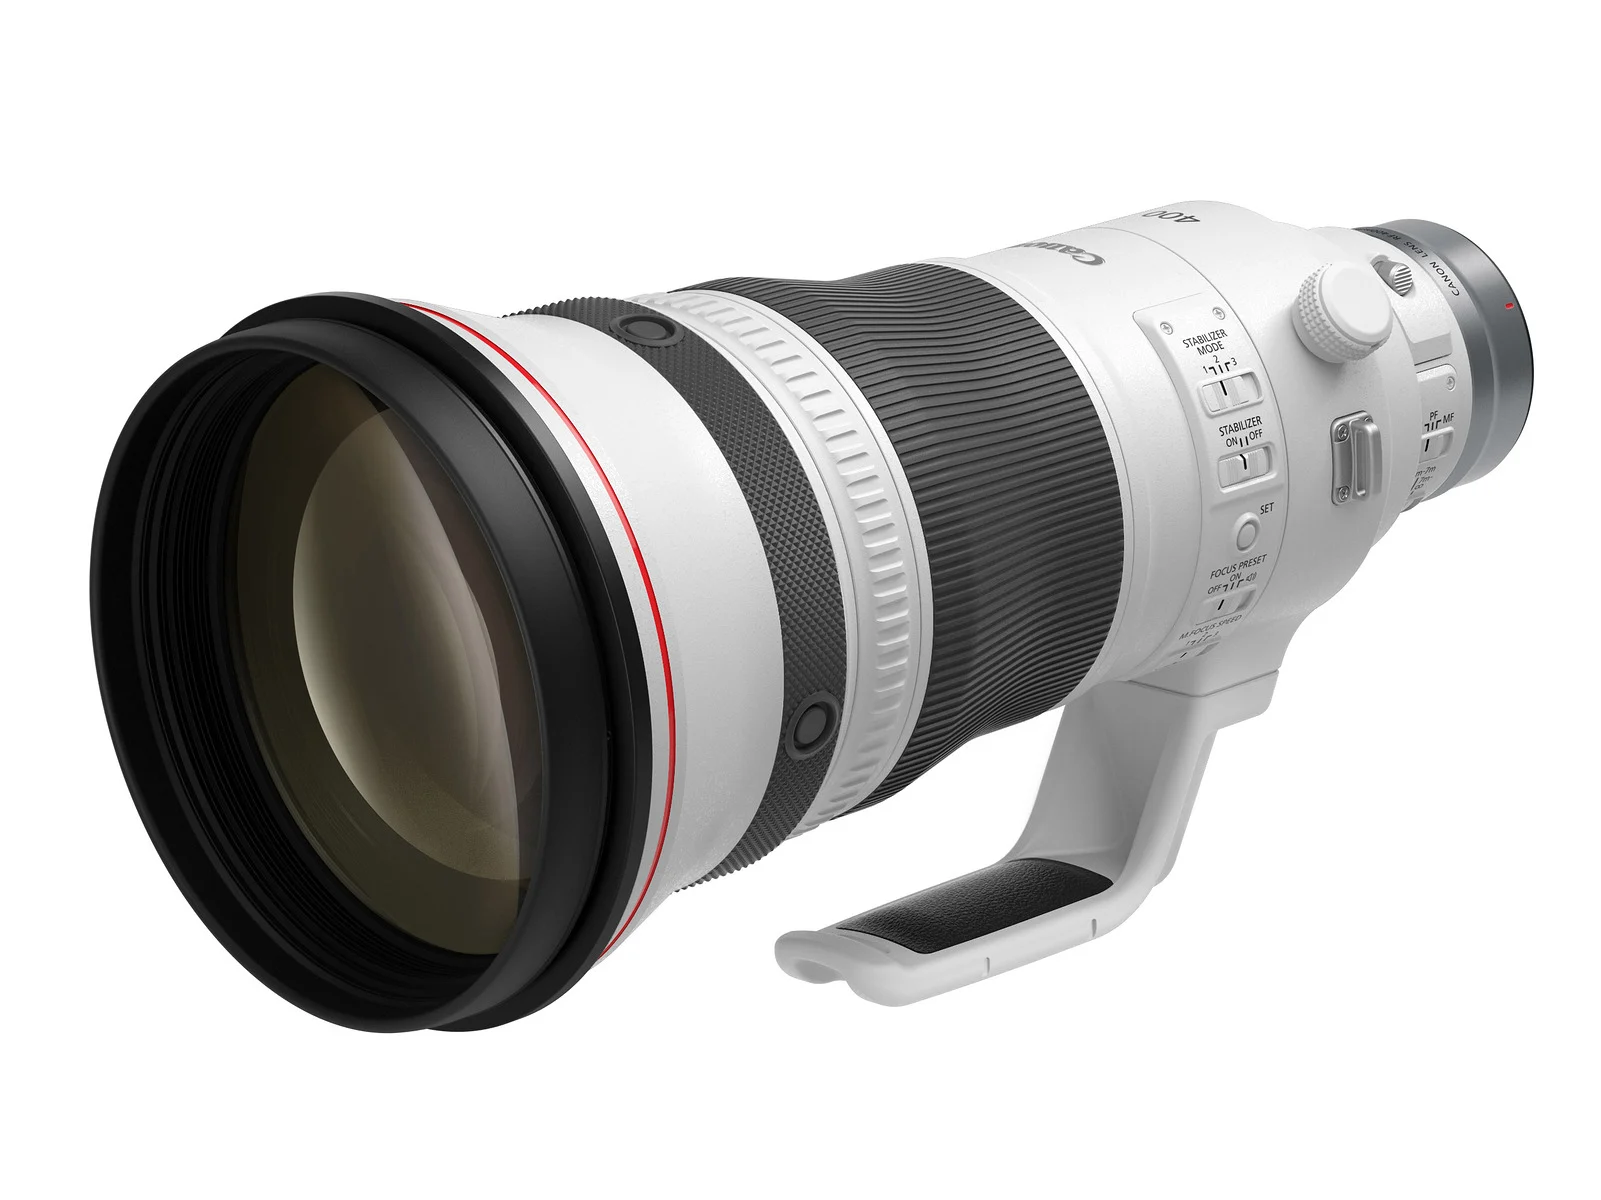 Canon RF 400mm f/2.8L IS USM and RF 600mm f/4L IS USM super telephoto lenses